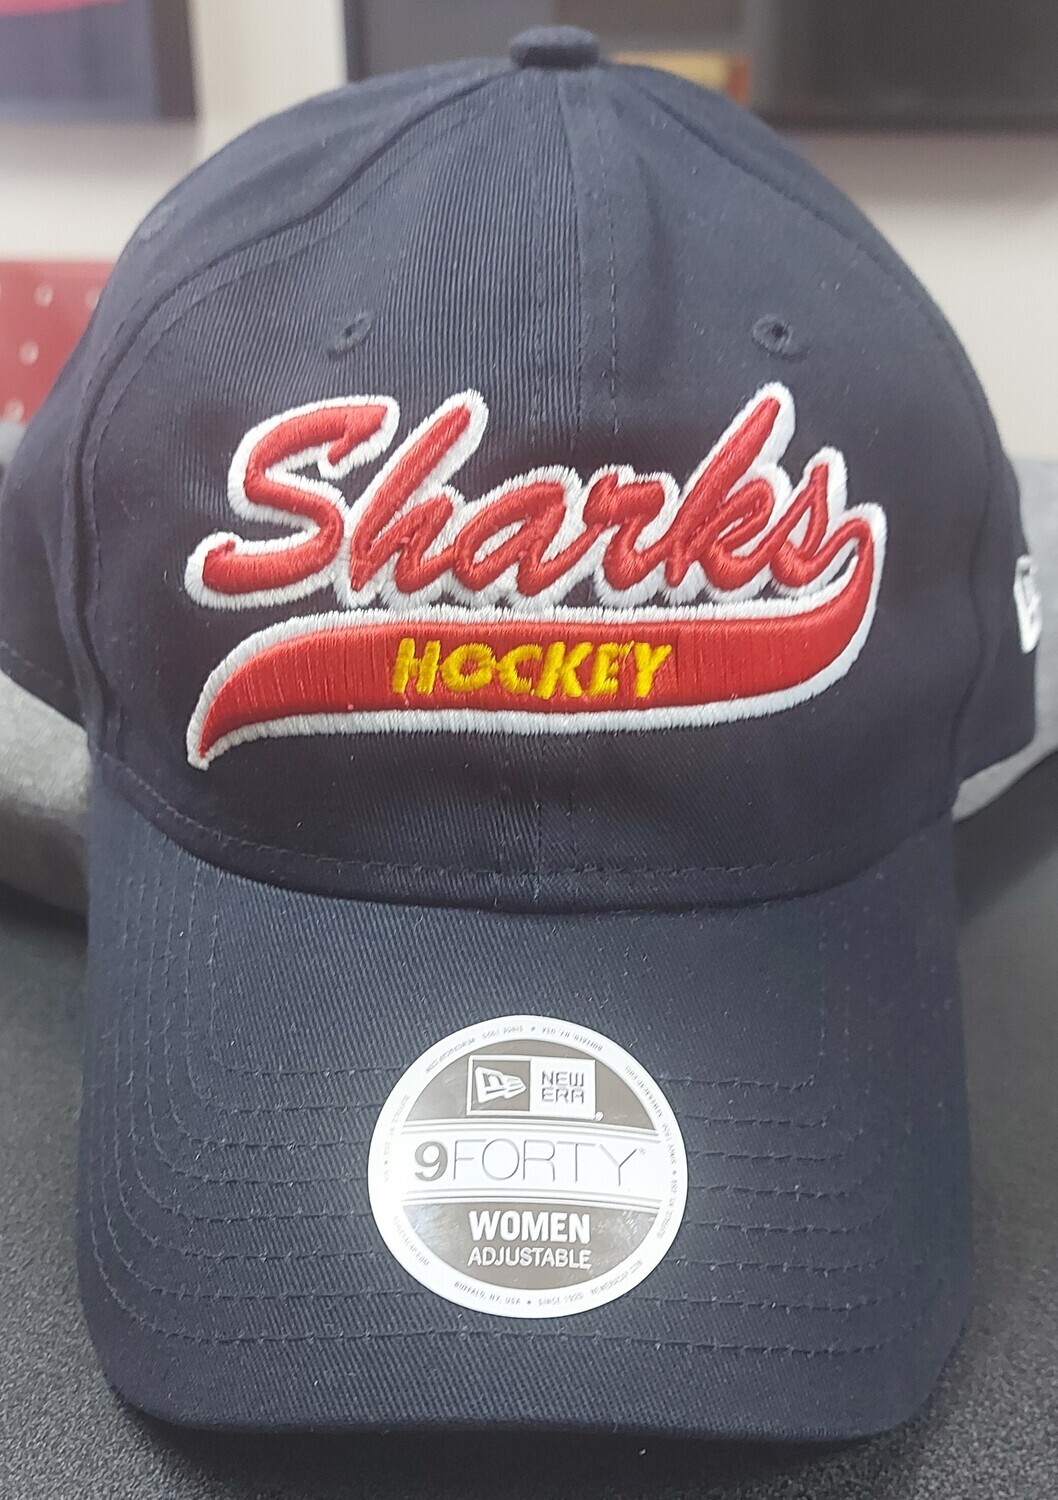 Baseball Hat - Sharks Hockey - New Era - Adjustable Strap, New Era &quot;Sharks Hockey&quot; Women&#39;s Ball Hat: One Size Fits All - with Adjustable Strap